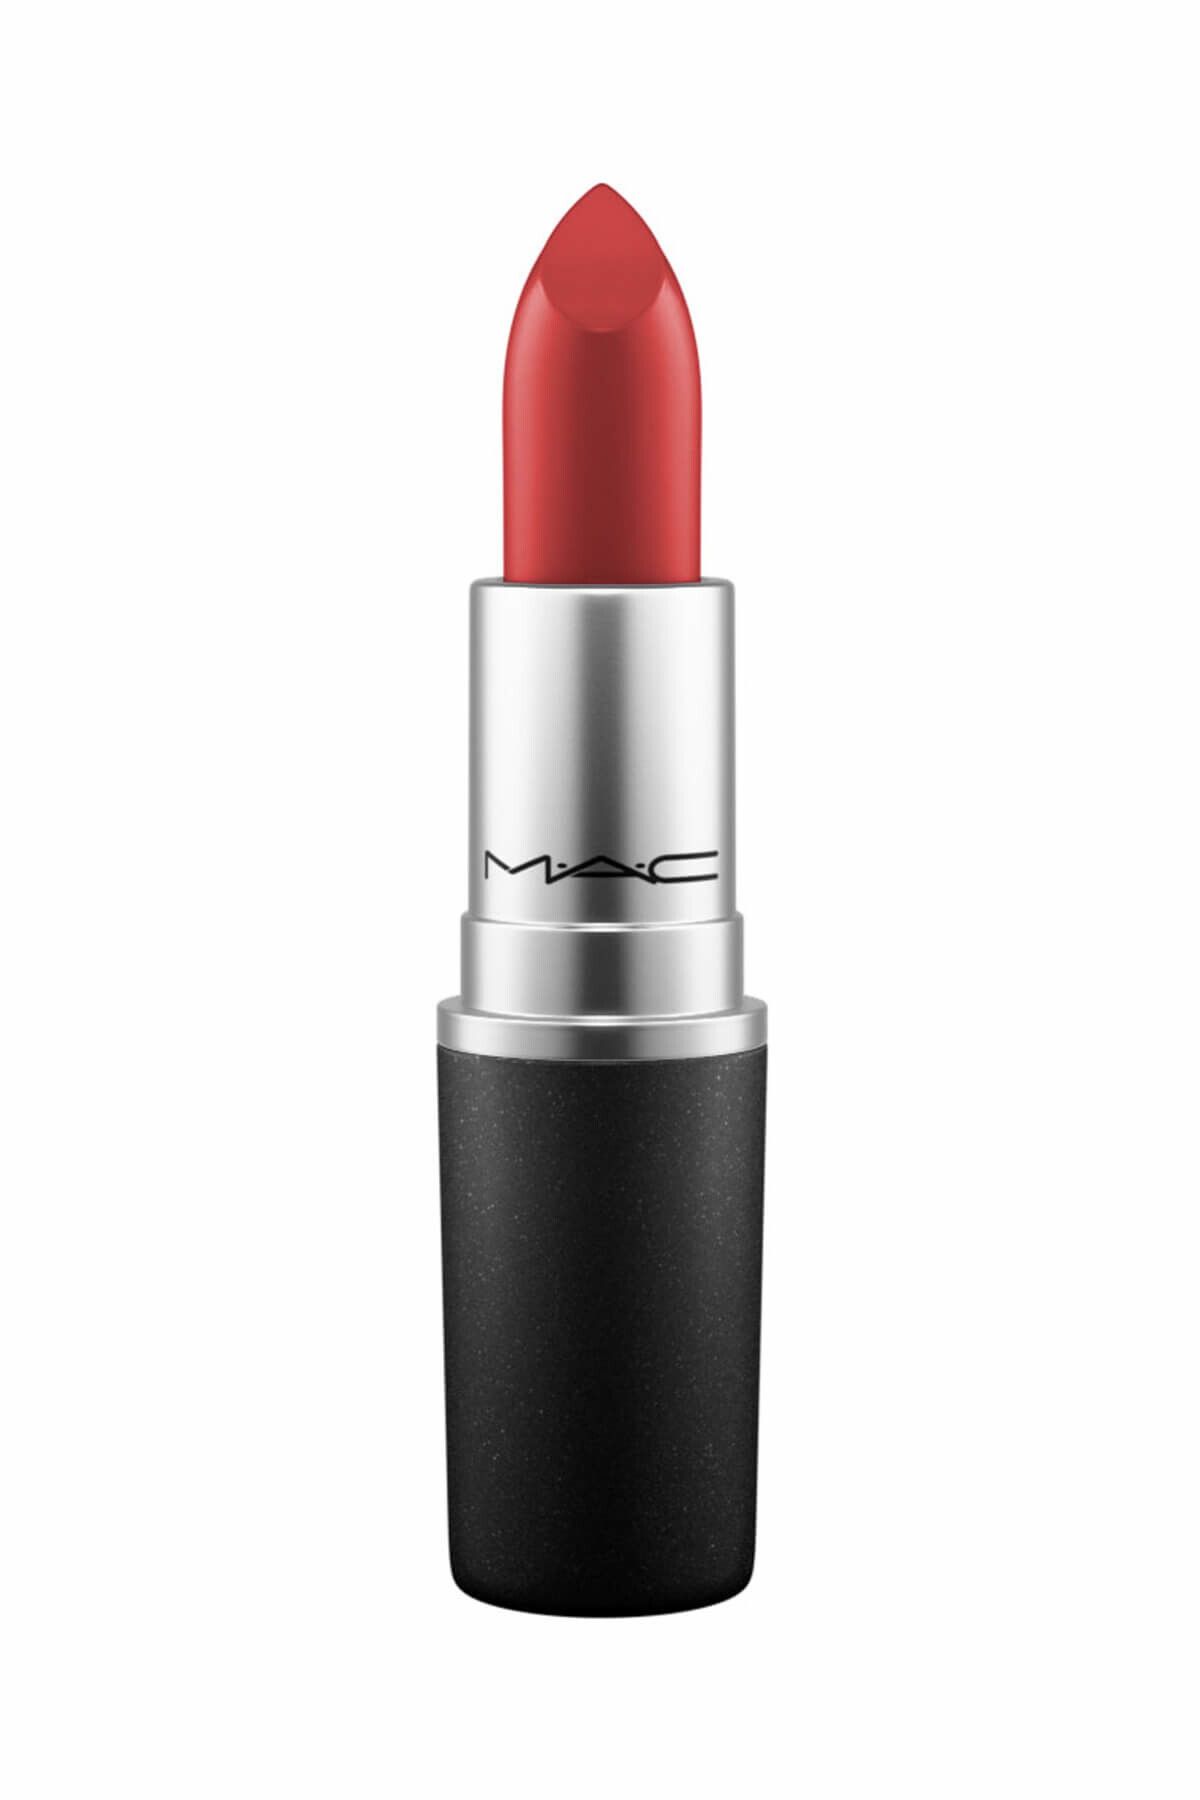 Mac Kremsi Ruj - Amplified Lipstick Dubonnet 3 g 773602051823